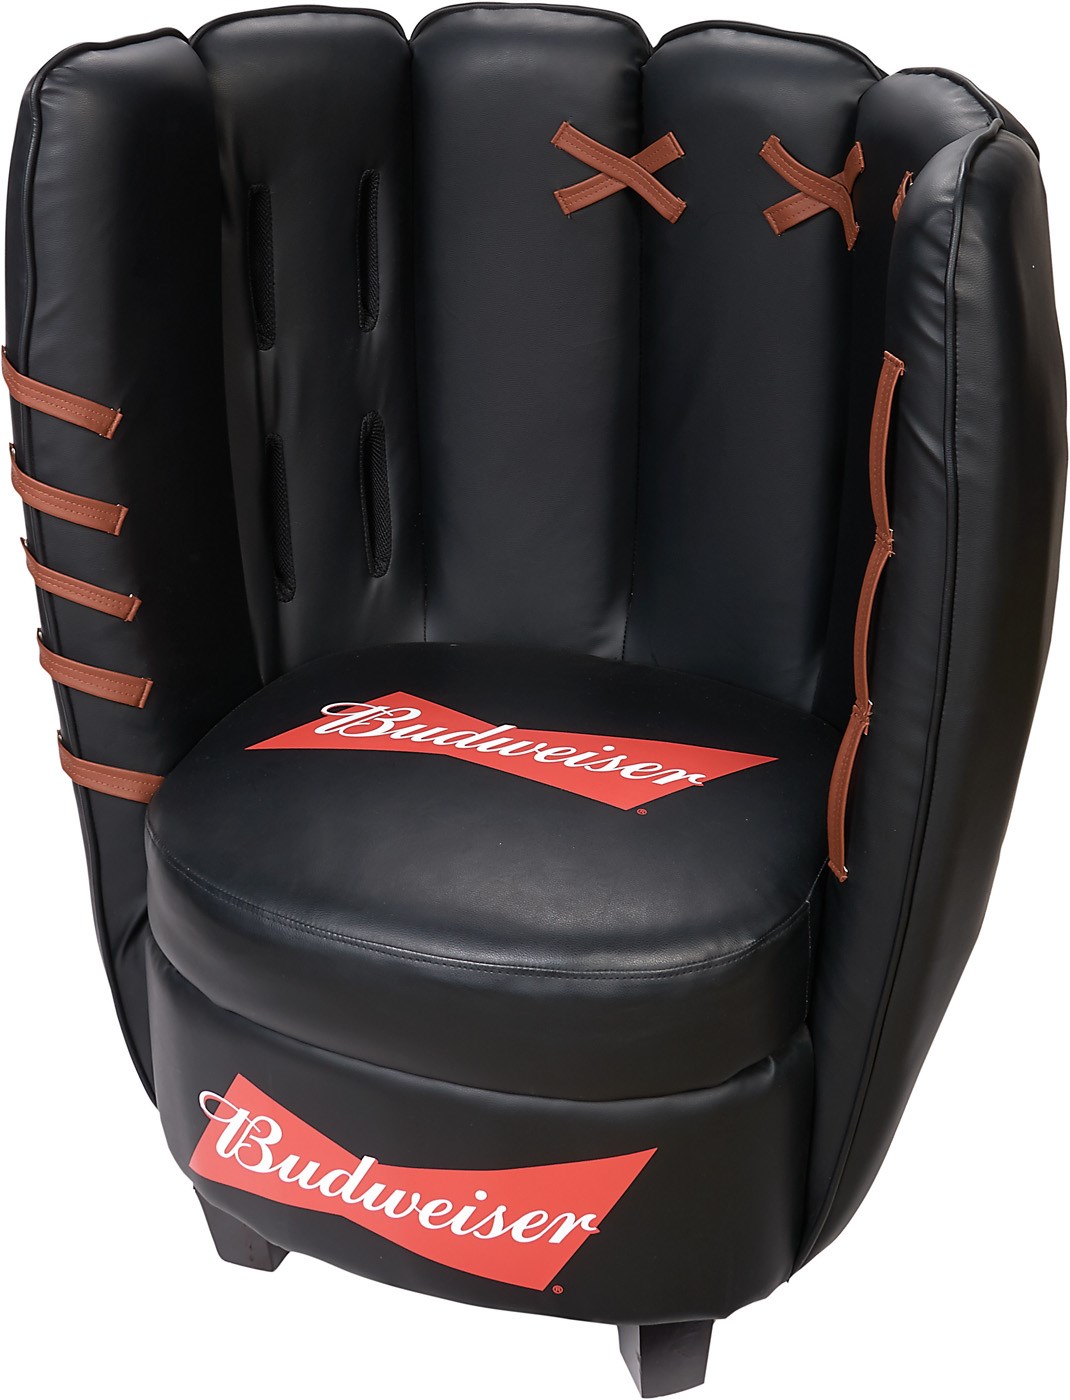 Budweiser Beer Giant Leather Baseball Glove Chair